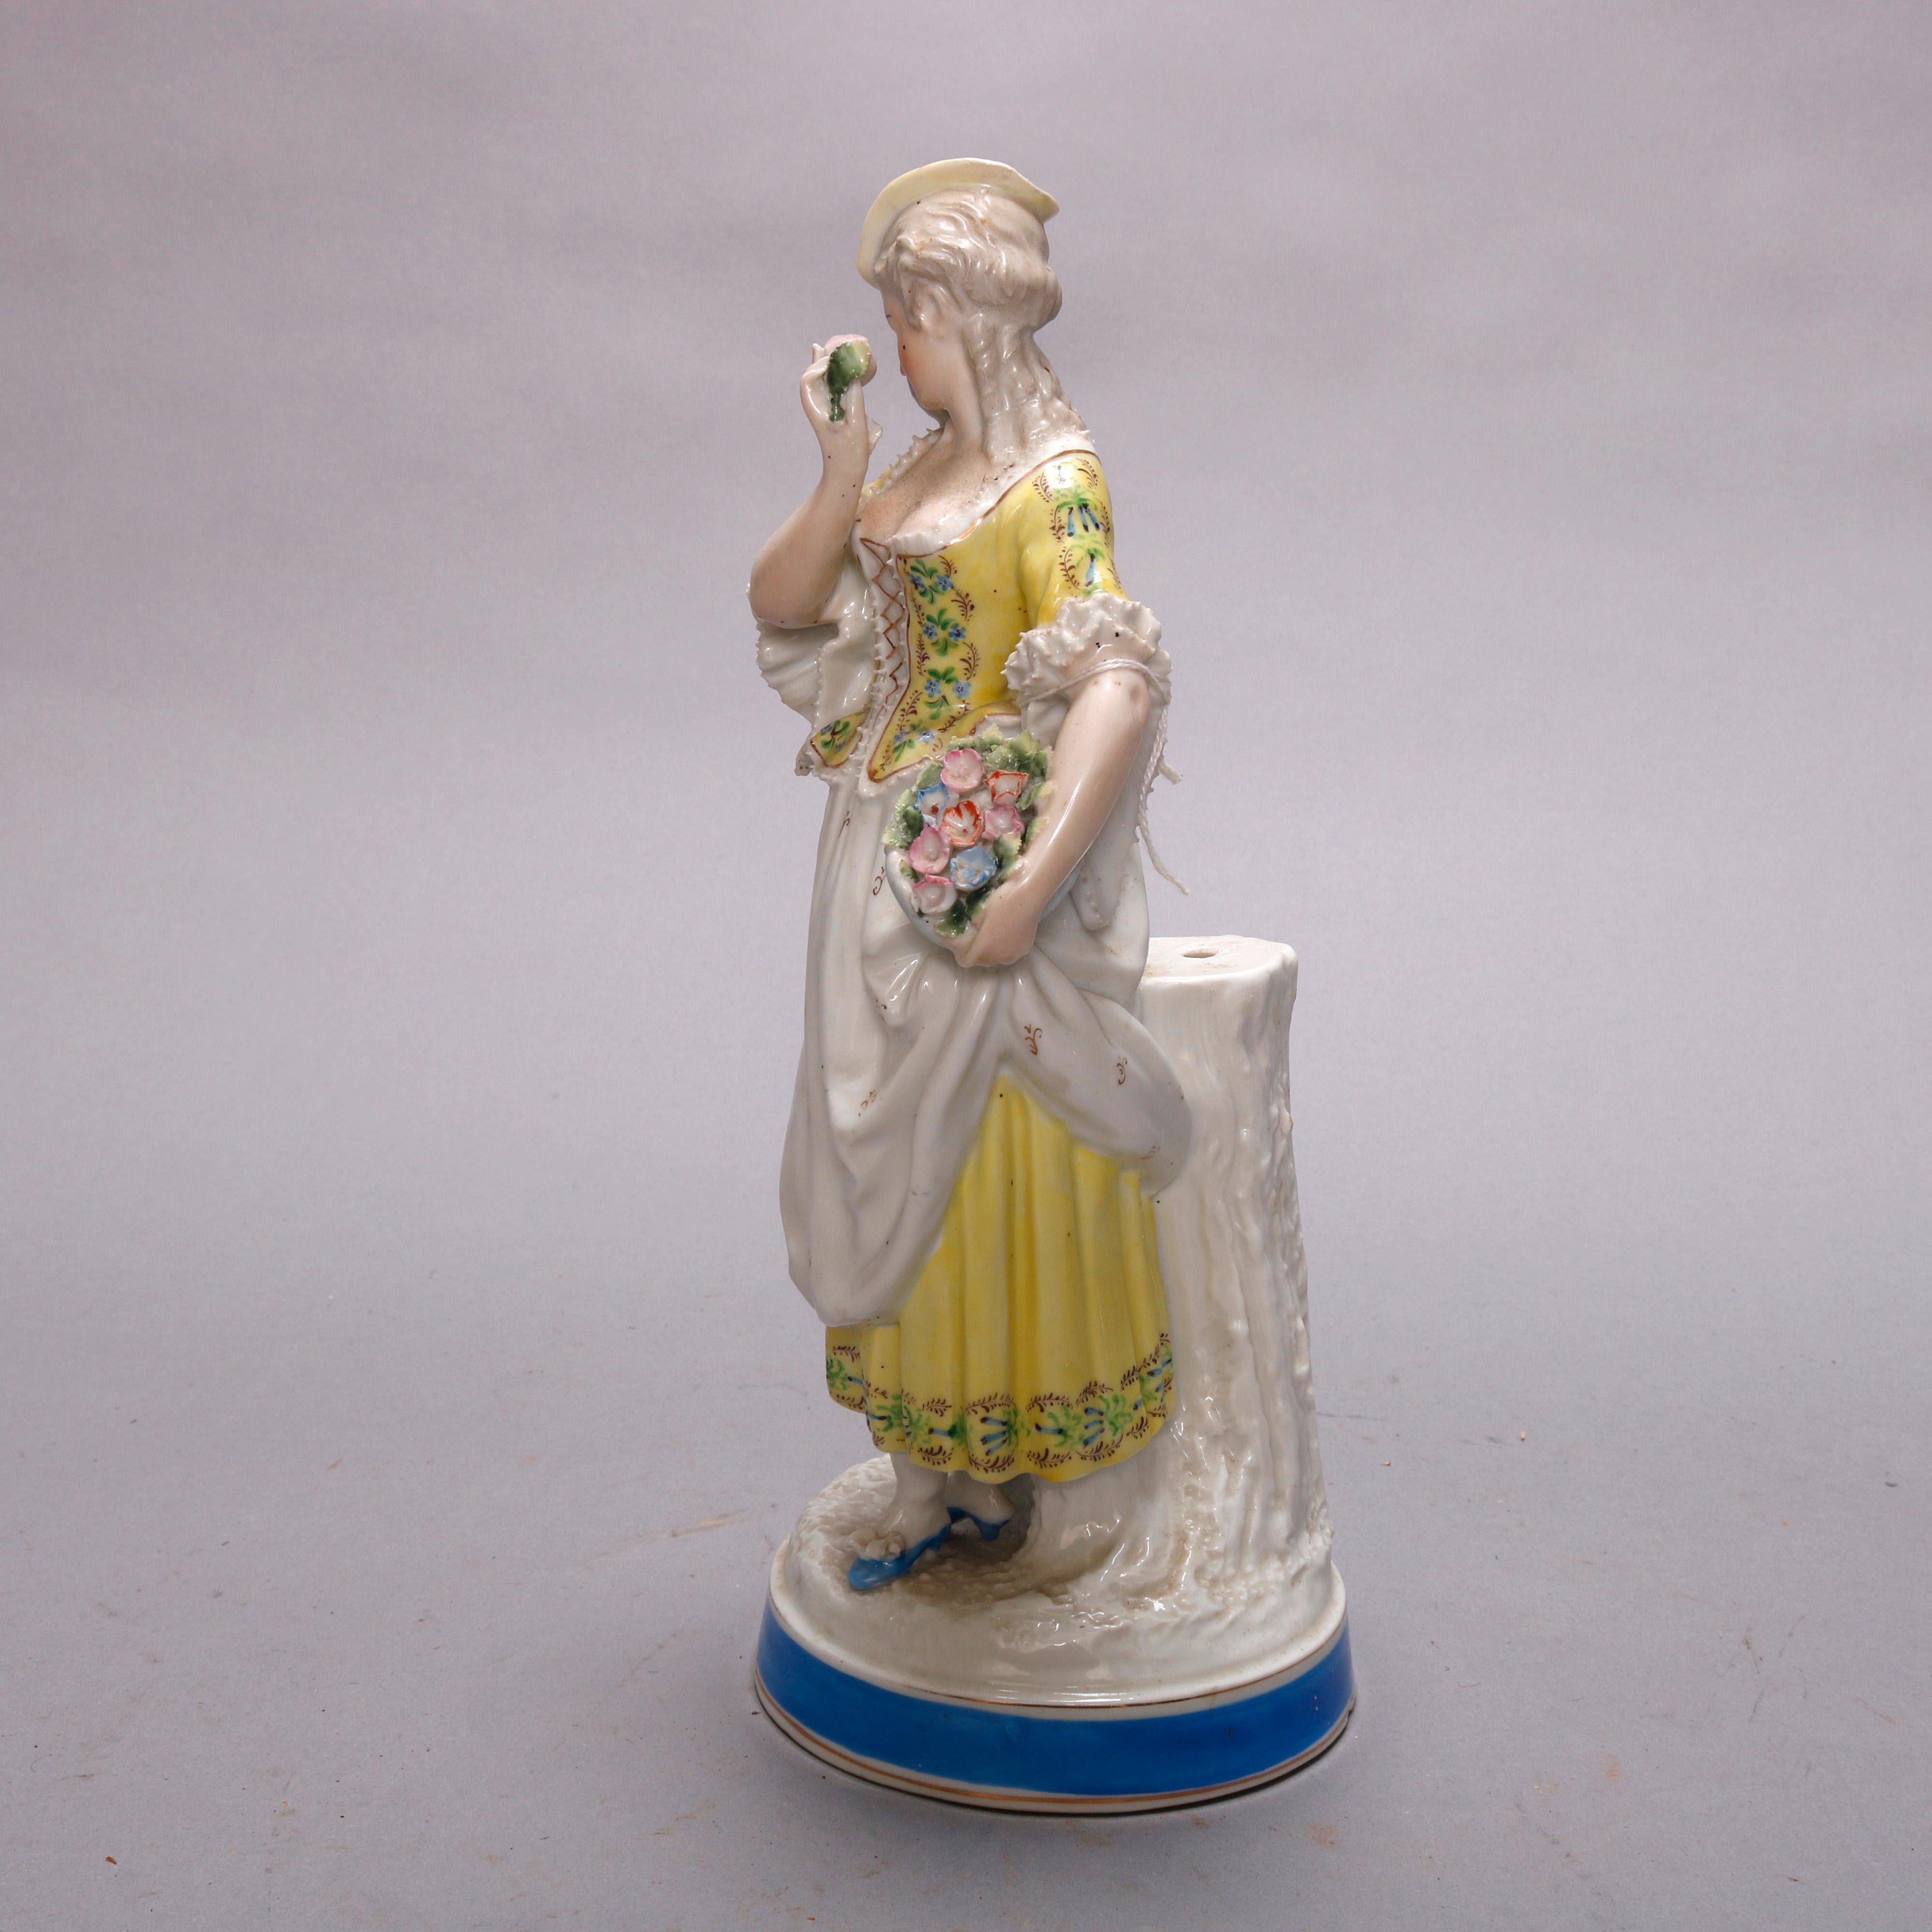 Victorian Antique German Hand Painted Porcelain Maiden Figure, Manner of Meissen, c1900 For Sale